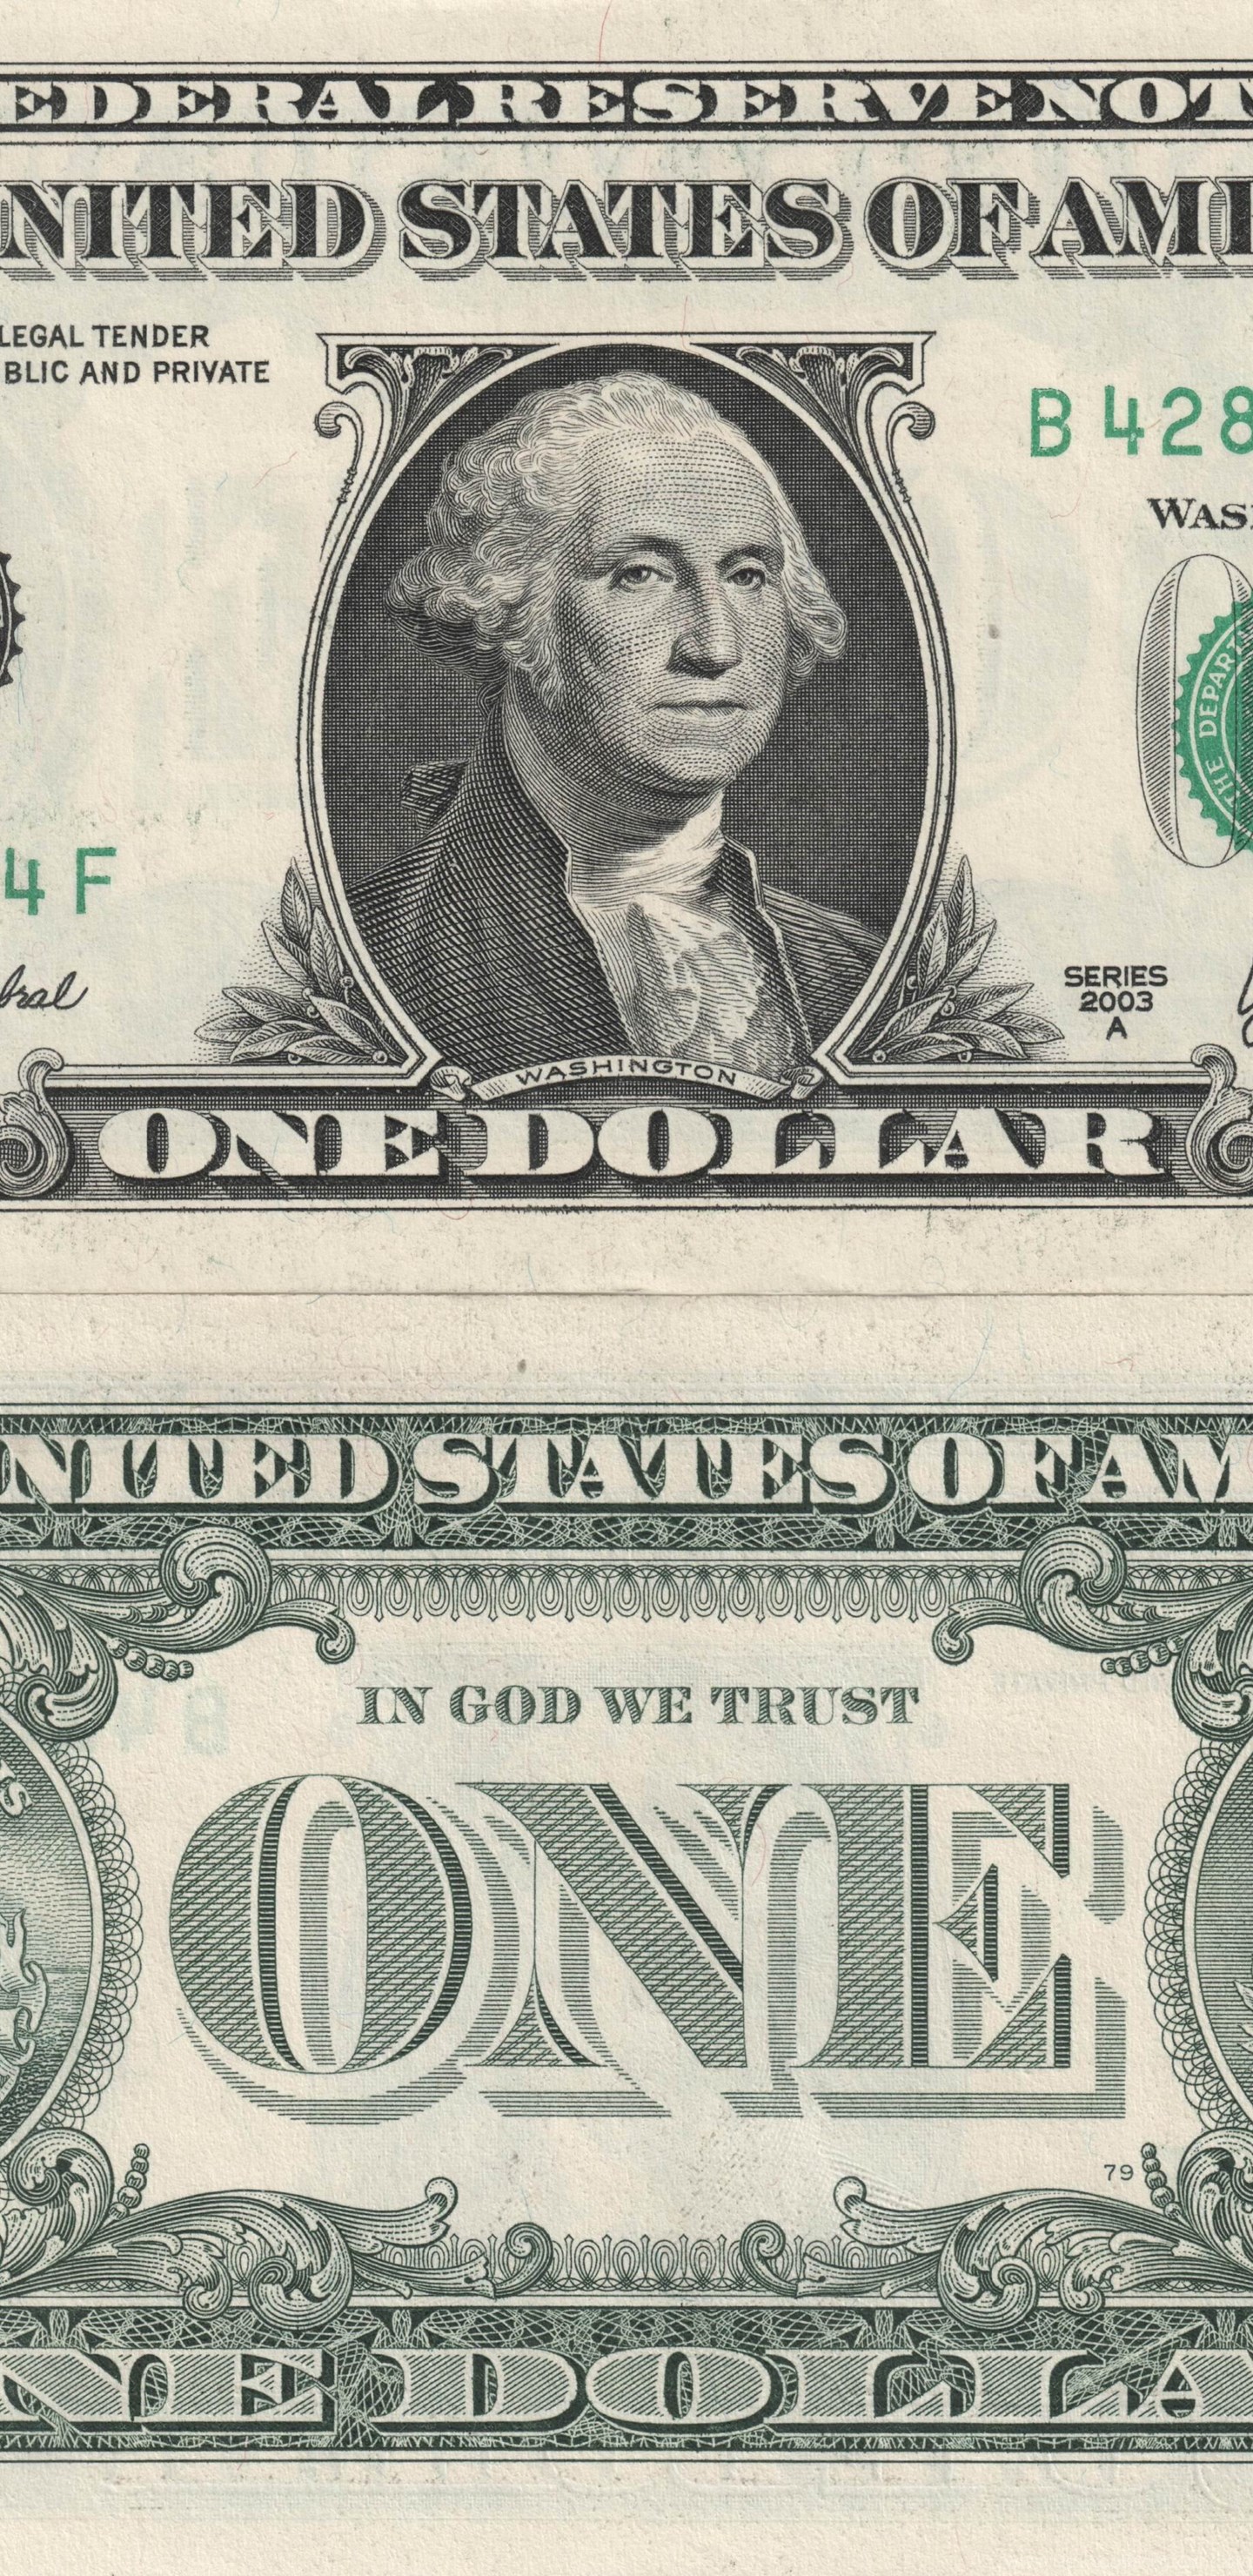 Доллар 1 октября. Один доллар. Доллар США. Один доллар изображение. Американский доллар.